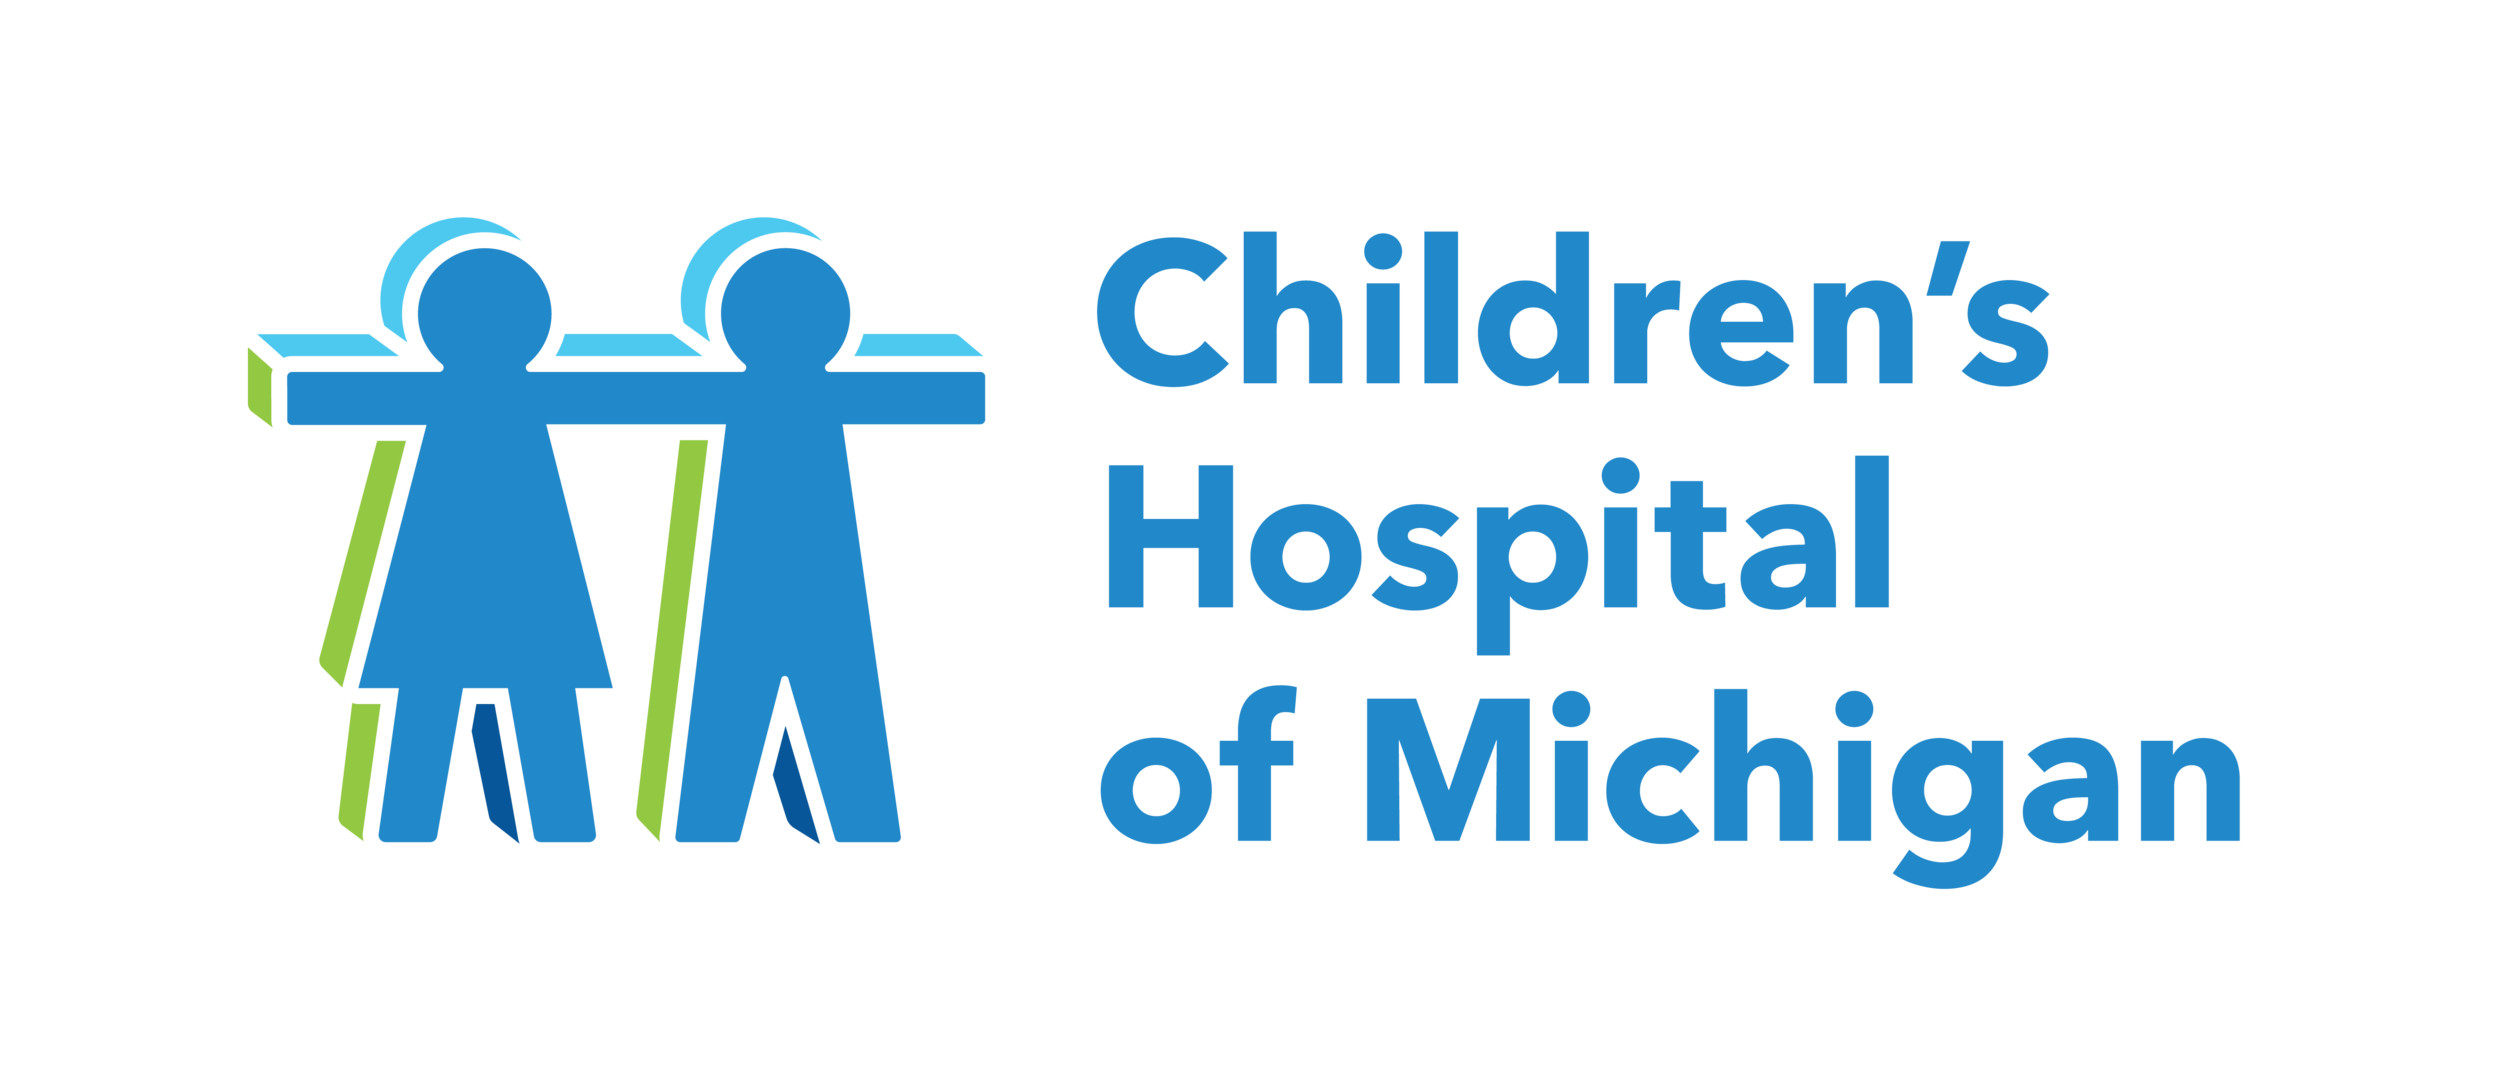 DMC-Children'sHospital-Rebrand-CMYK_Logo-Horizontal-4Color.png